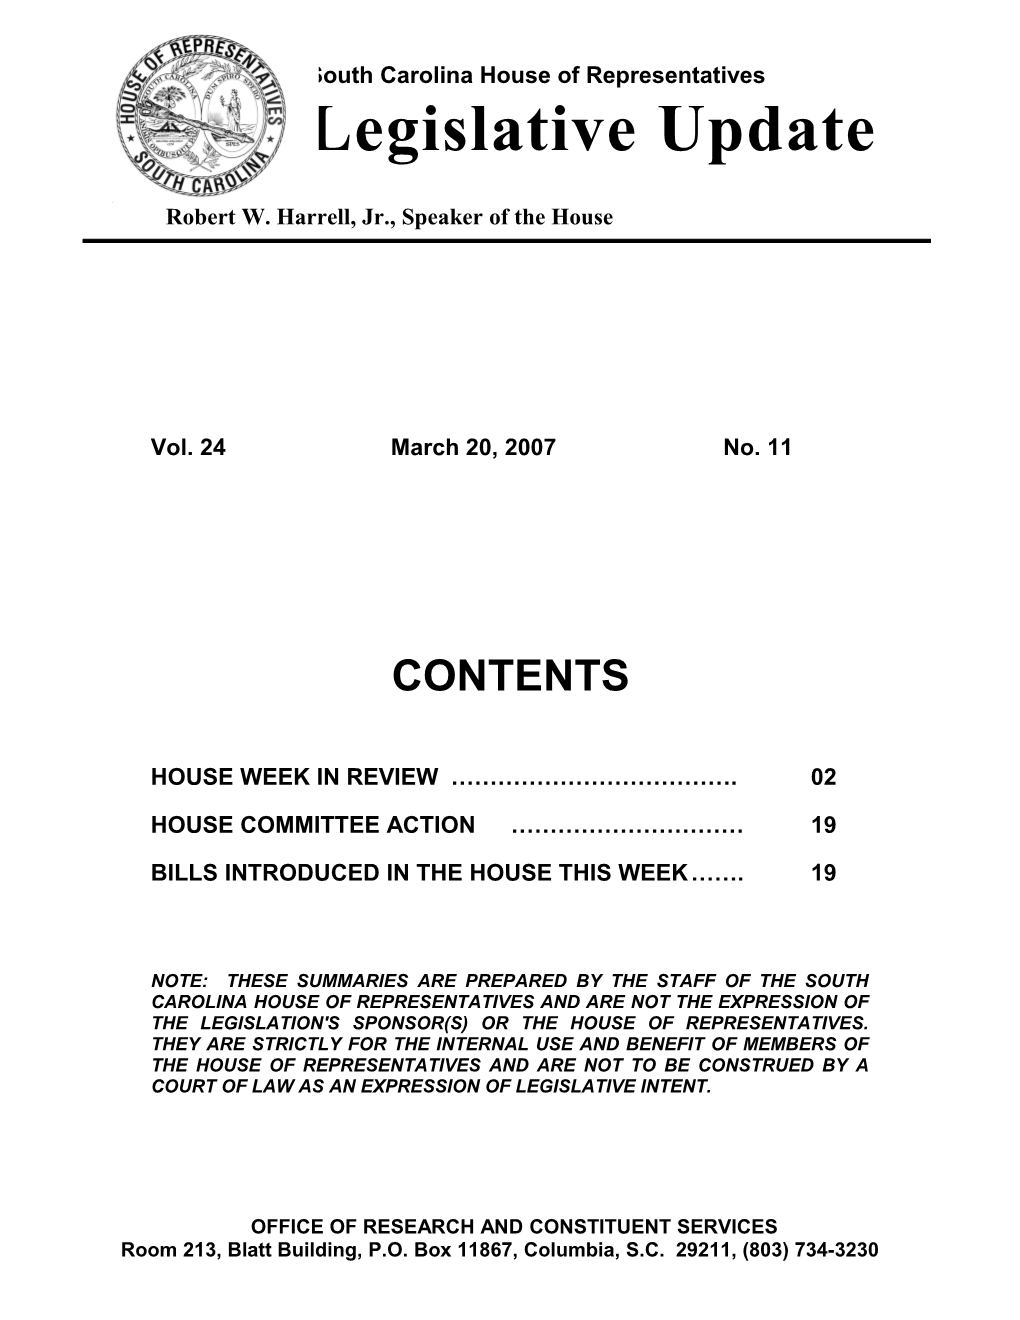 Legislative Update - Vol. 24 No. 11 March 20, 2007 - South Carolina Legislature Online